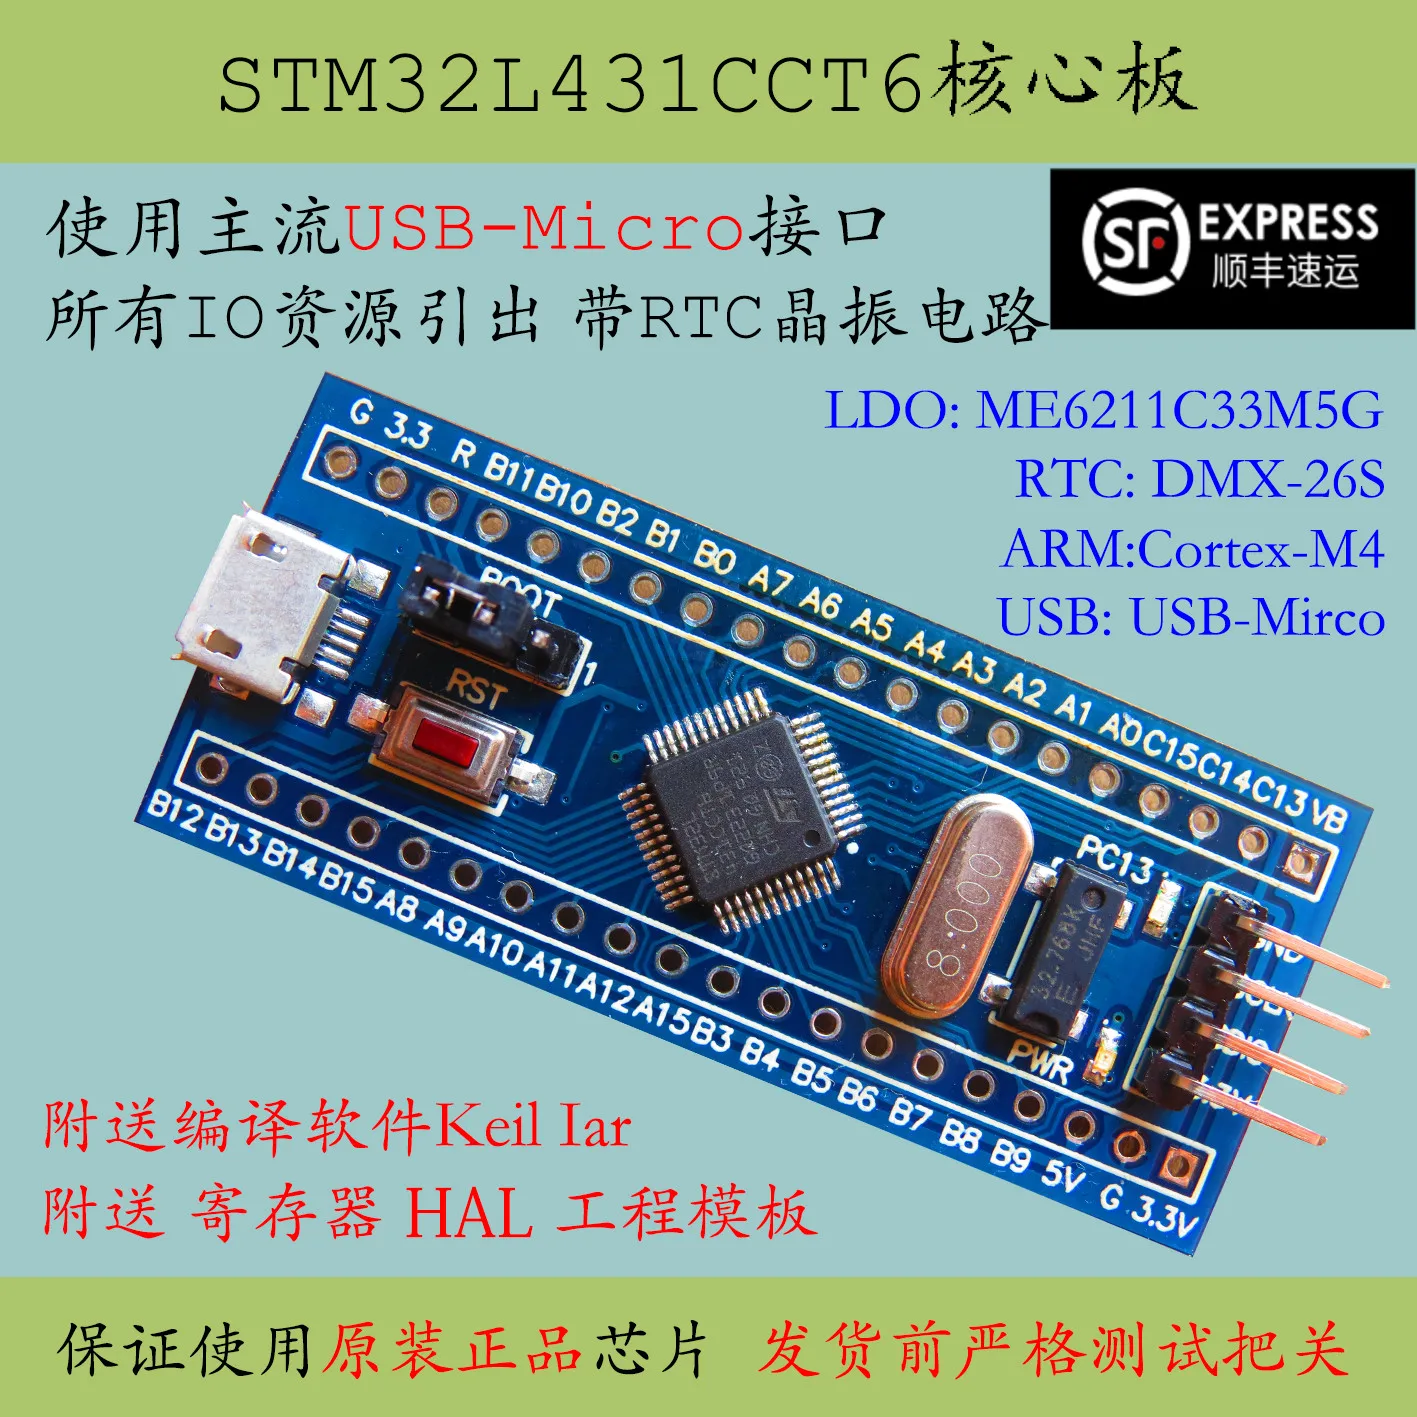 Stm32l431cct6 Development Board New Product Stm32l431 Minimum System M4 Core Board Low Power Consumption Board